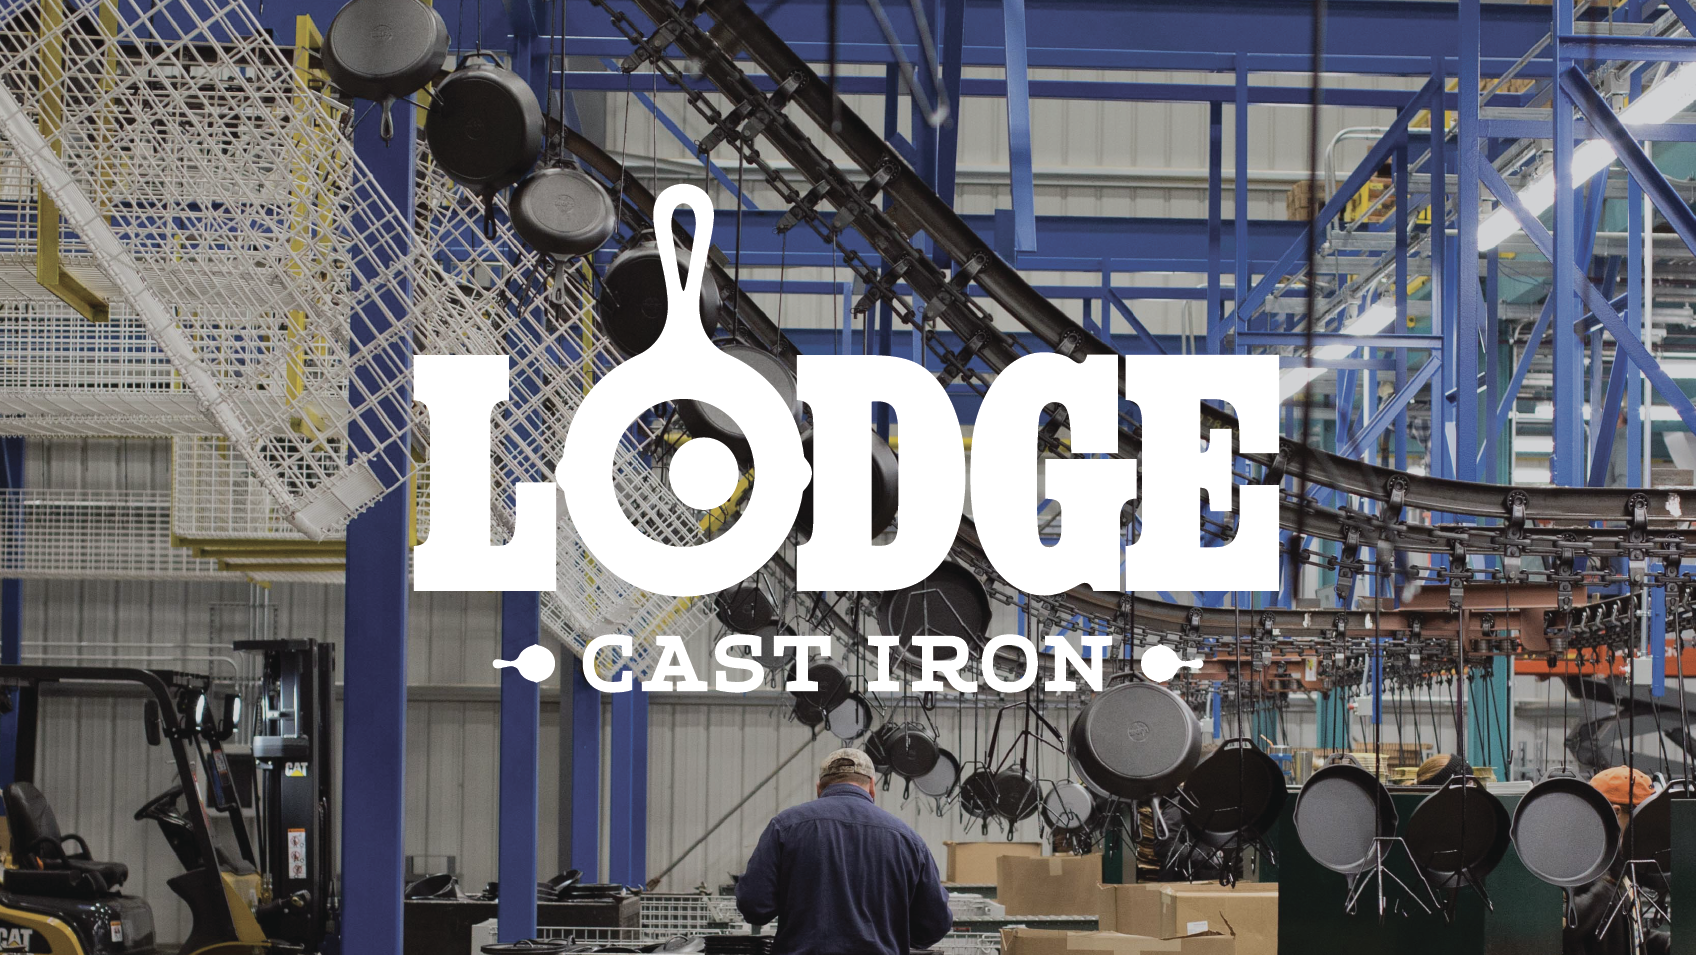 Lodge cast iron